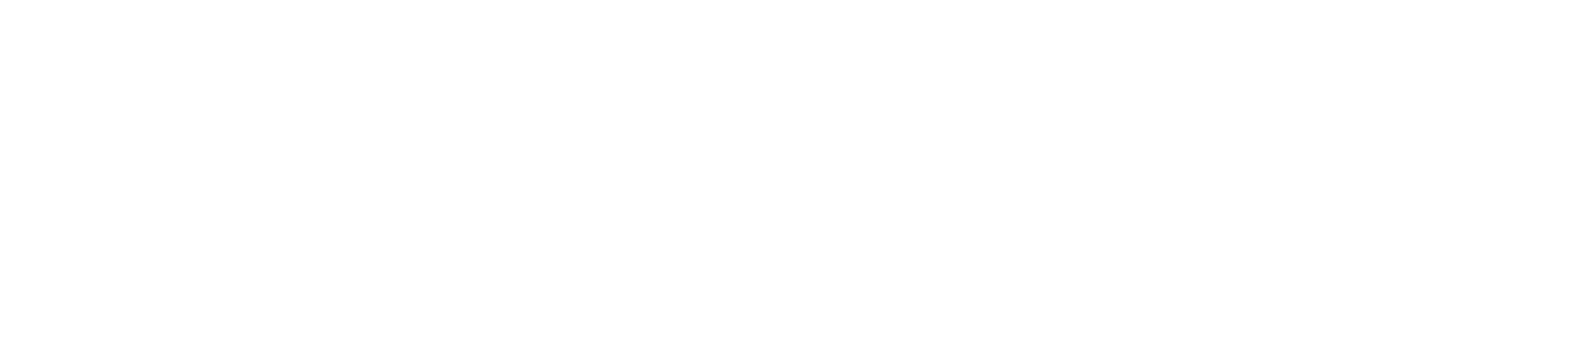 Jesus Christ Superstar in Concert